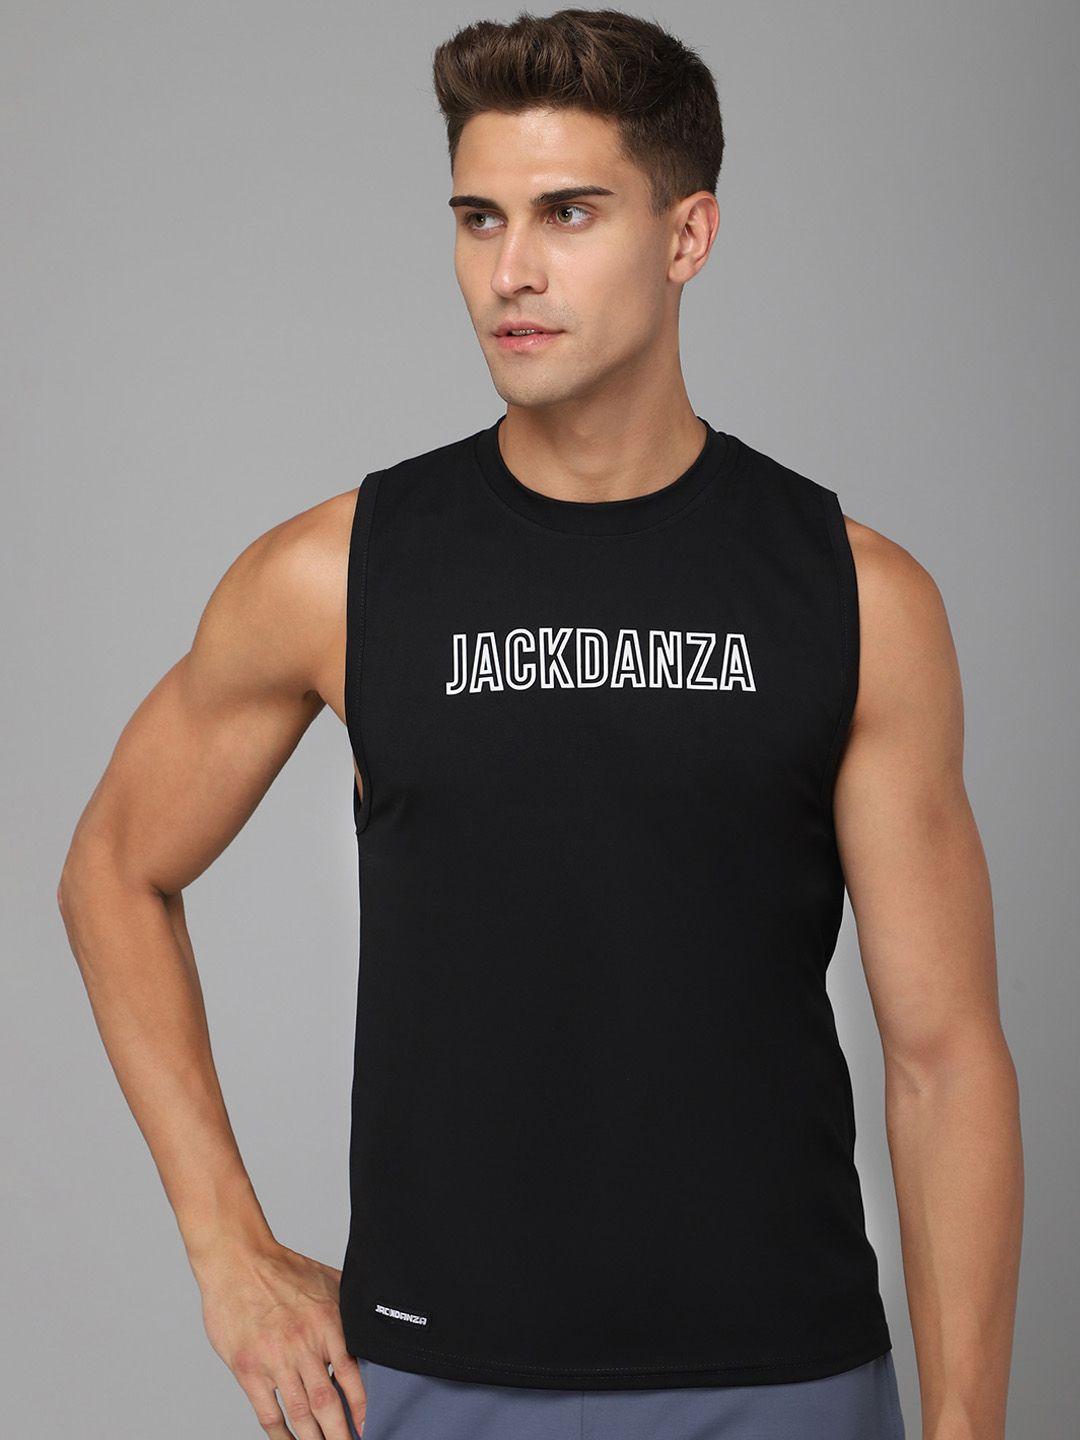 jackdanza men black printed tank vest